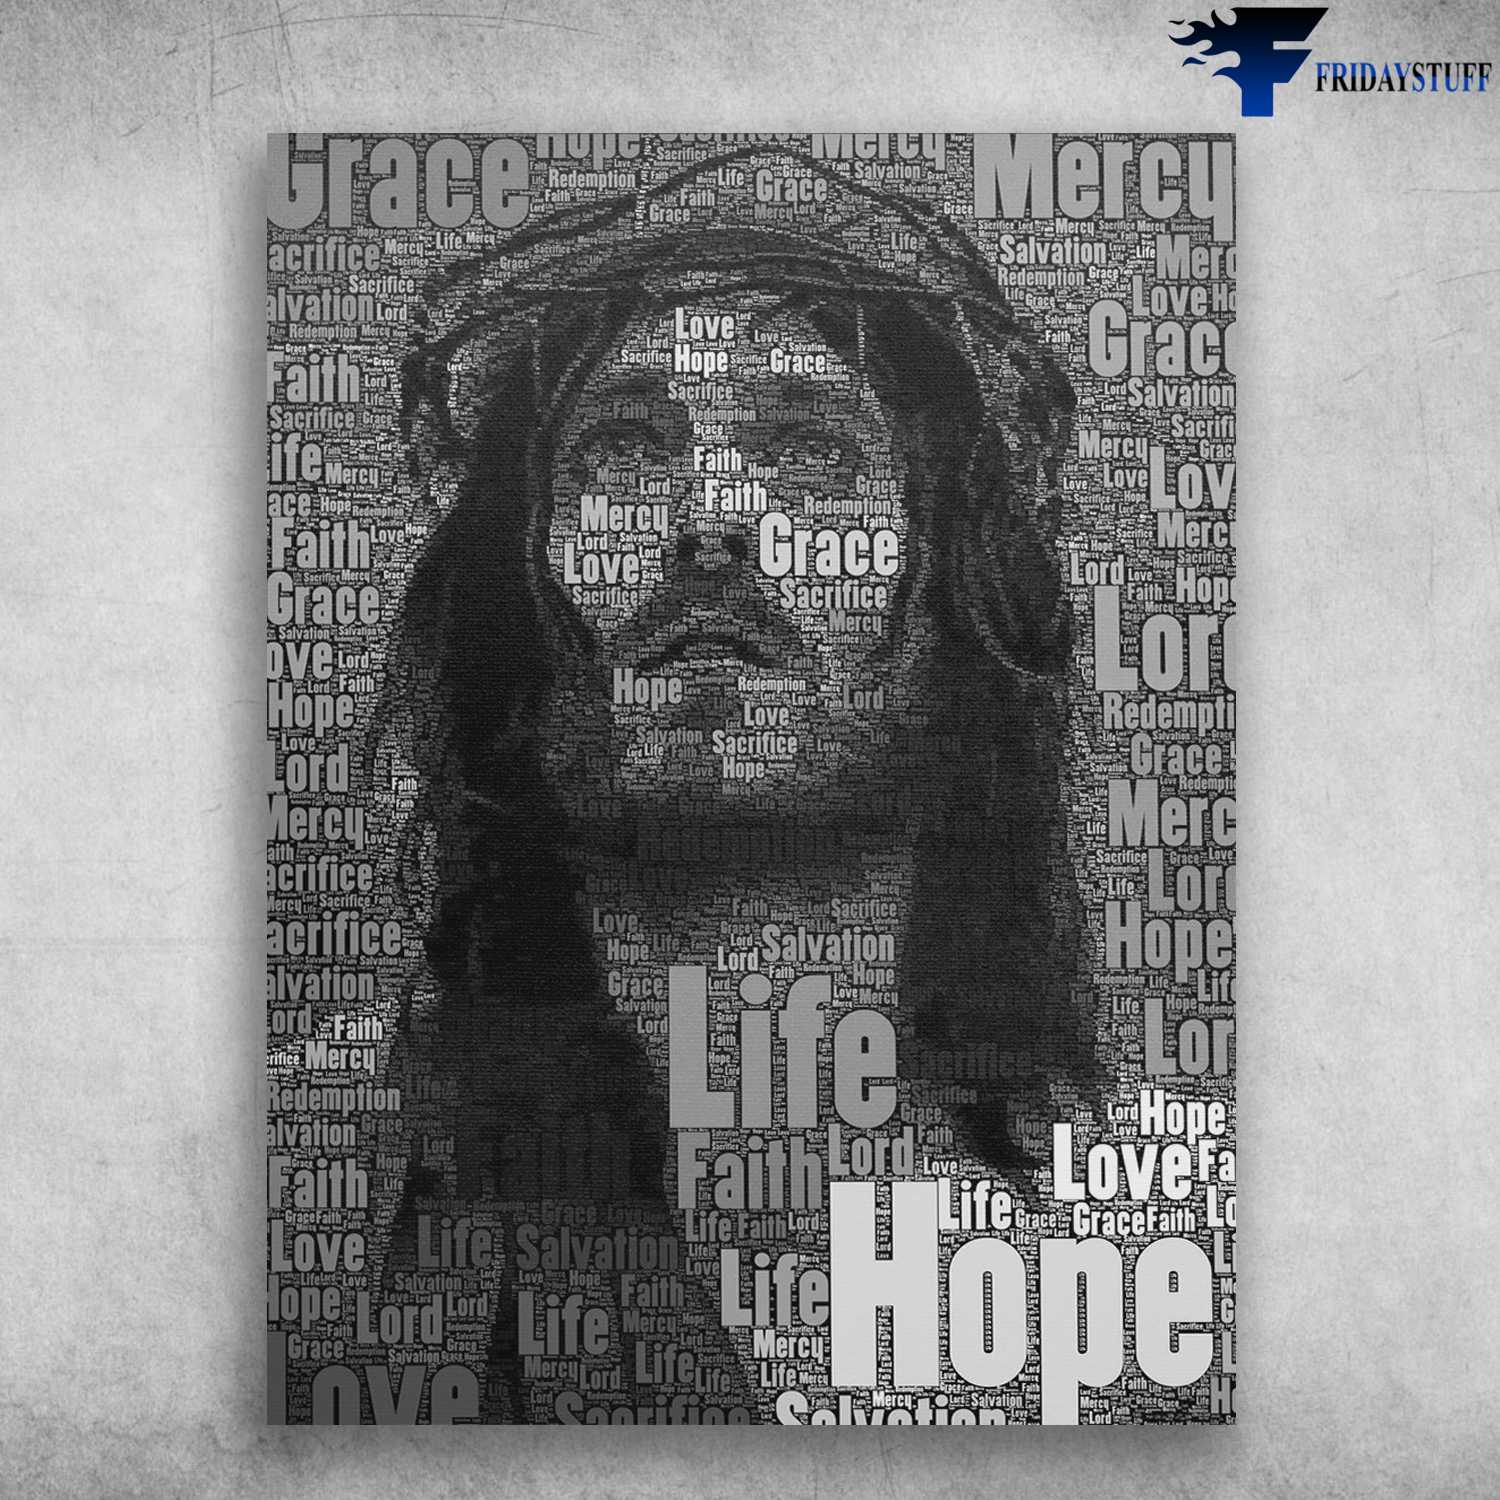 God Poster, Jesus Portrait, Hope, Grace, Sacrifice, Love, Life